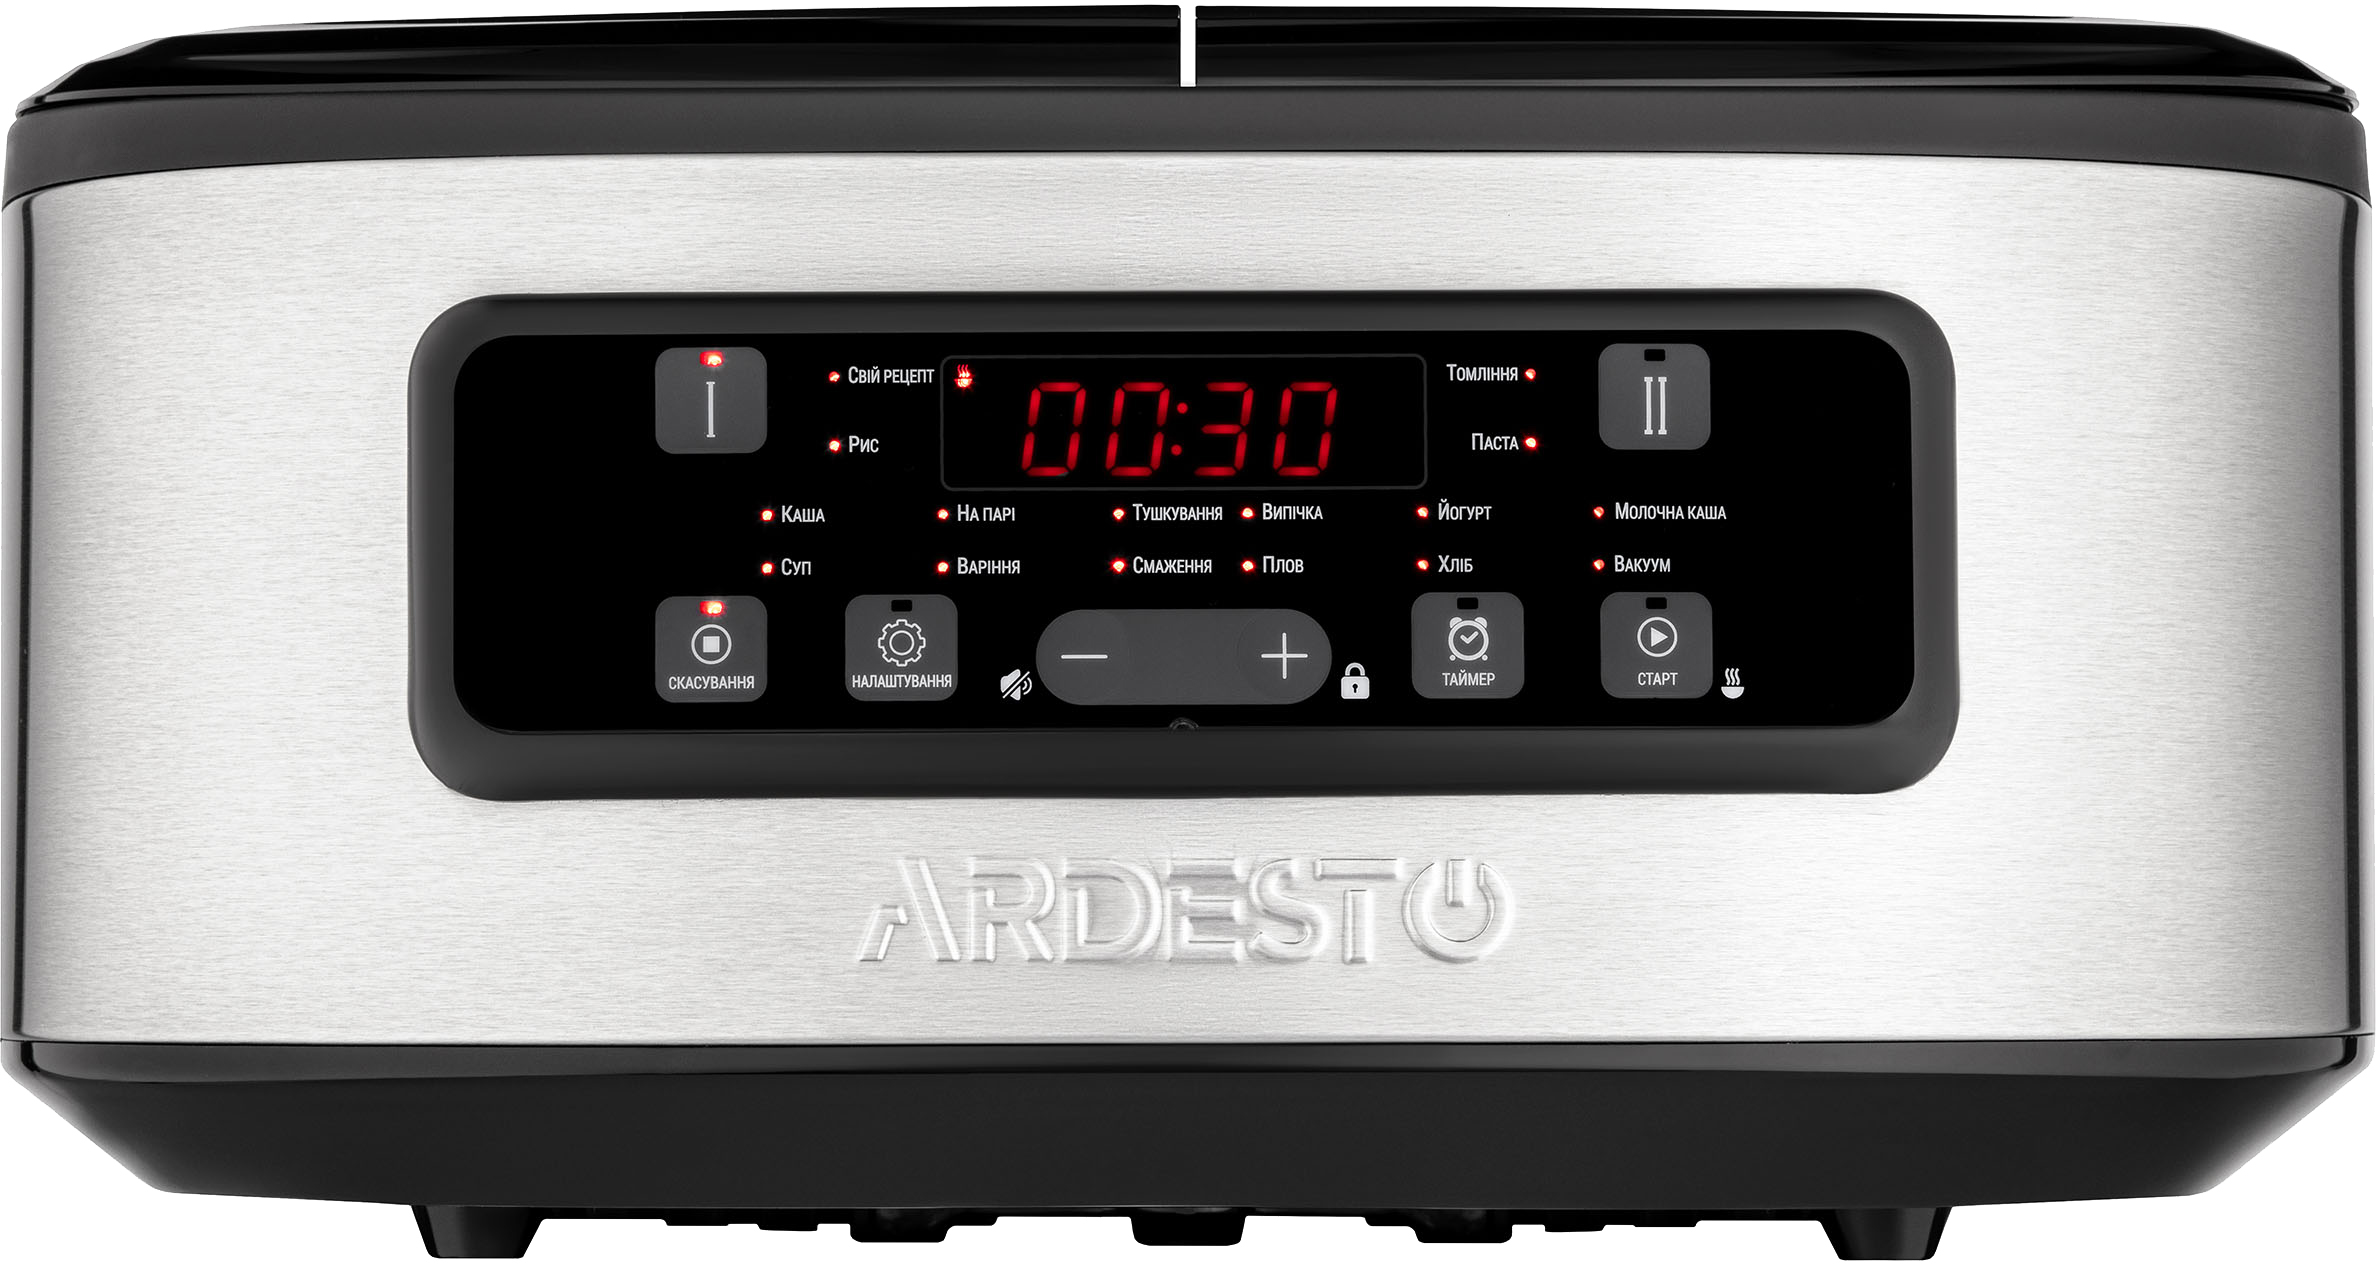 Мультиварка Ardesto DMC-SA1212SB в интернет-магазине, главное фото